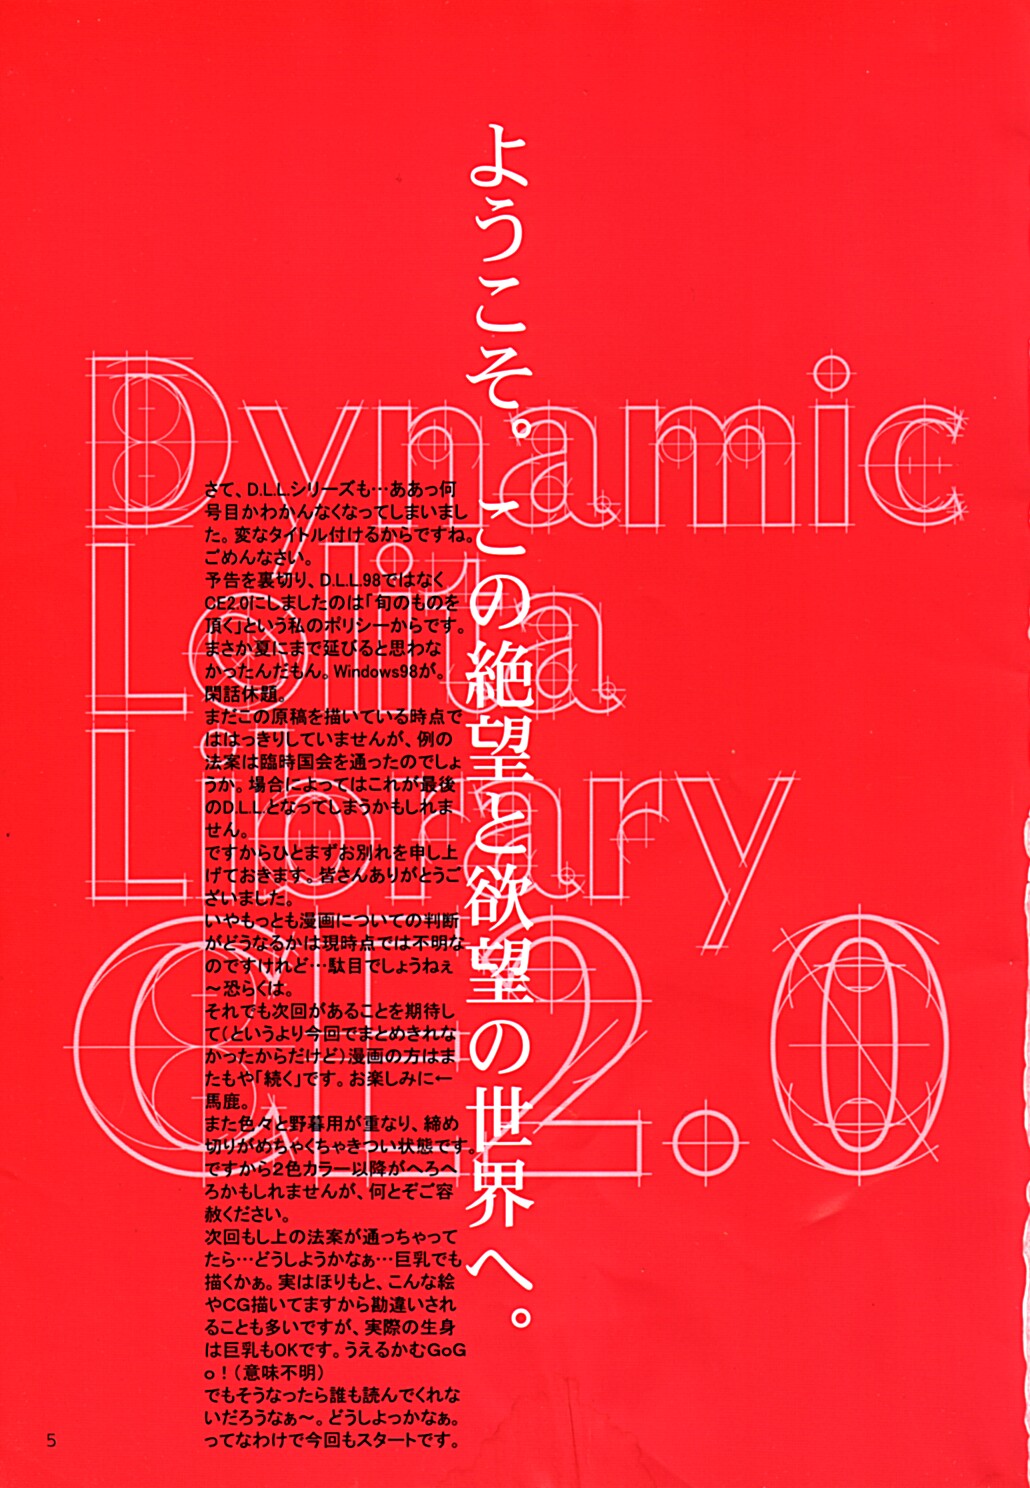 [Studio309 (ほりもとあきら)] Dynamic Lolita Library CE2.0